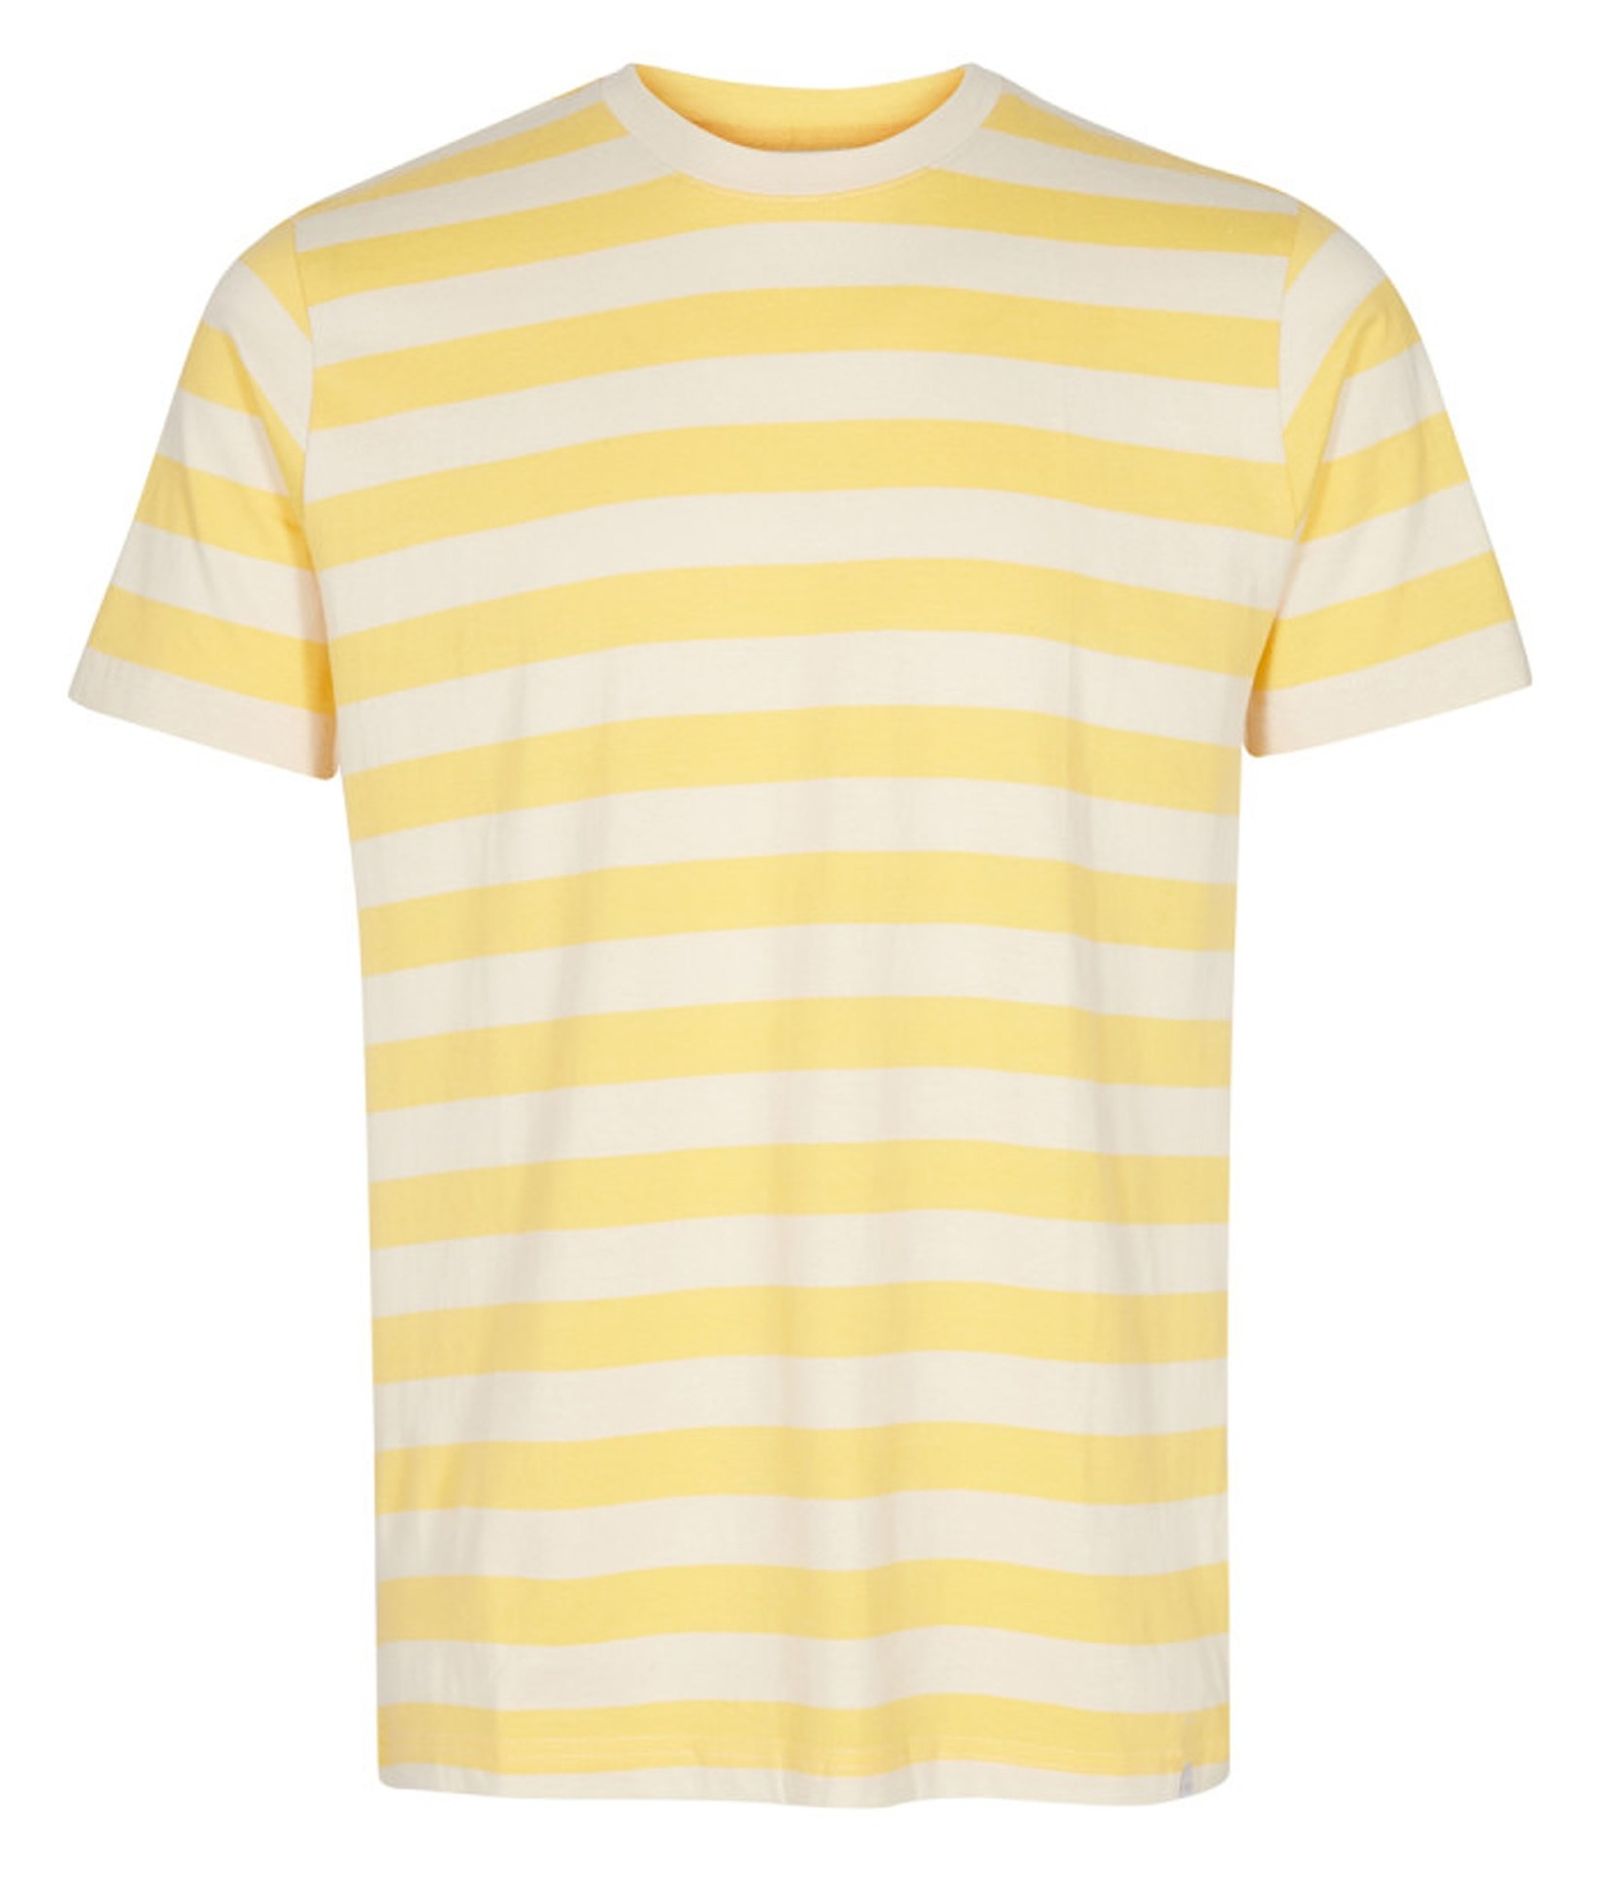 تی شرت نخی مردانه Thiago - مینیموم - زرد - 2